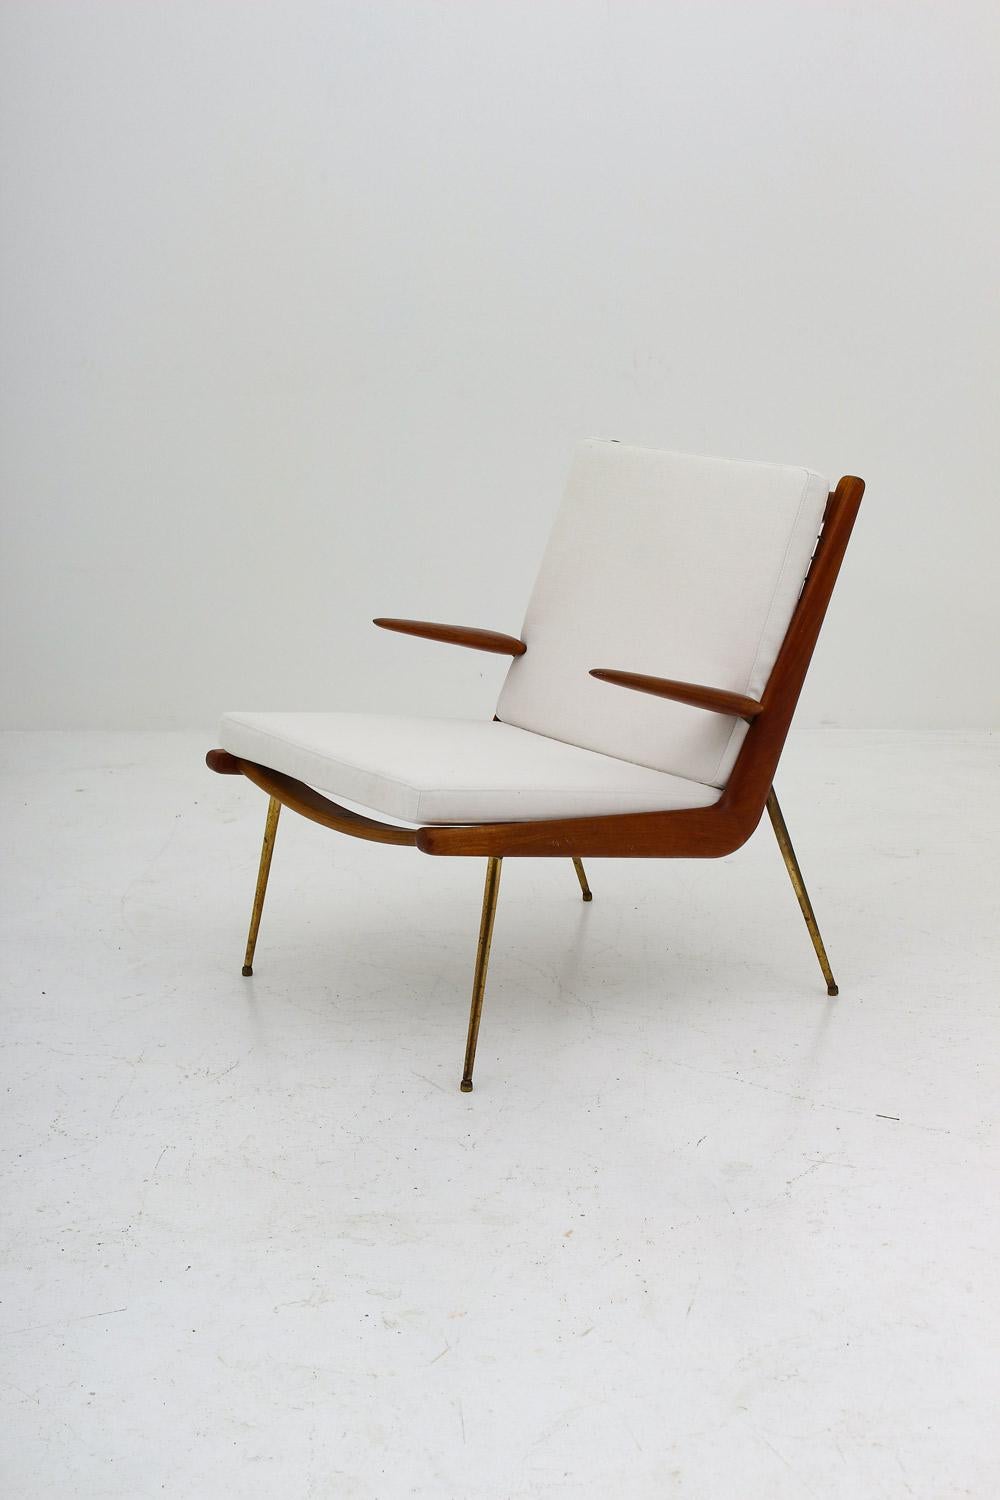 Mid-Century Modern Scandinavian Lounge Chair FD135 by Peter Hvidt & Orla Mølgaard-Nielsen